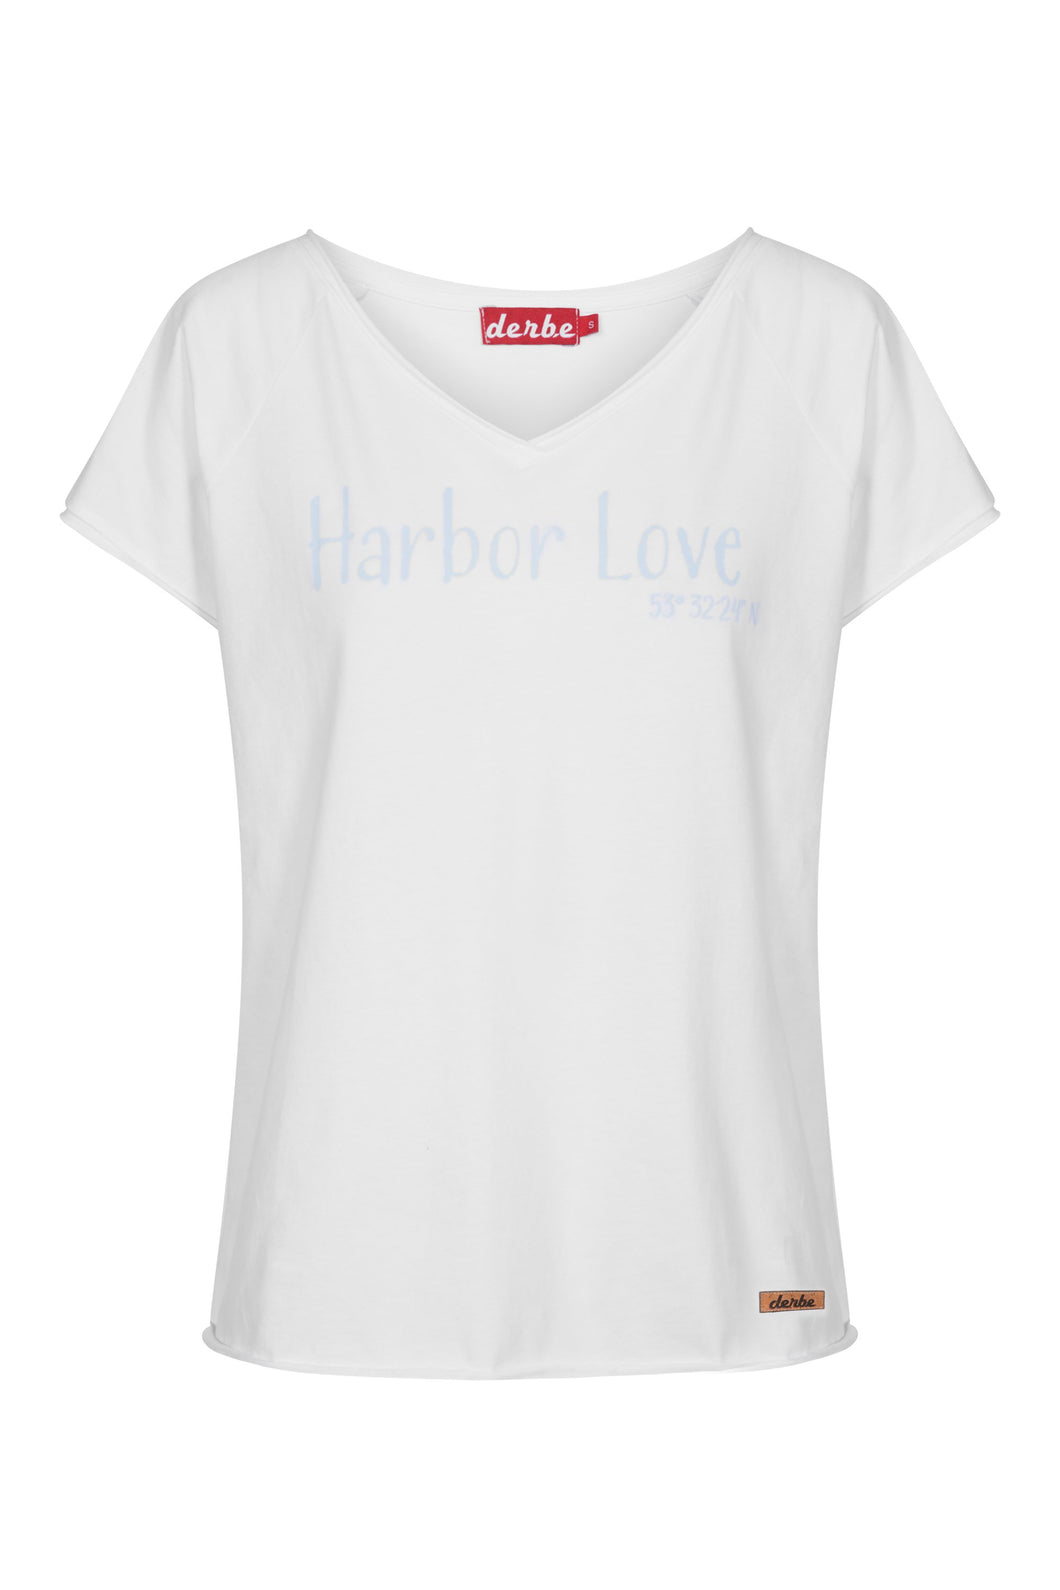 Harbor Love white